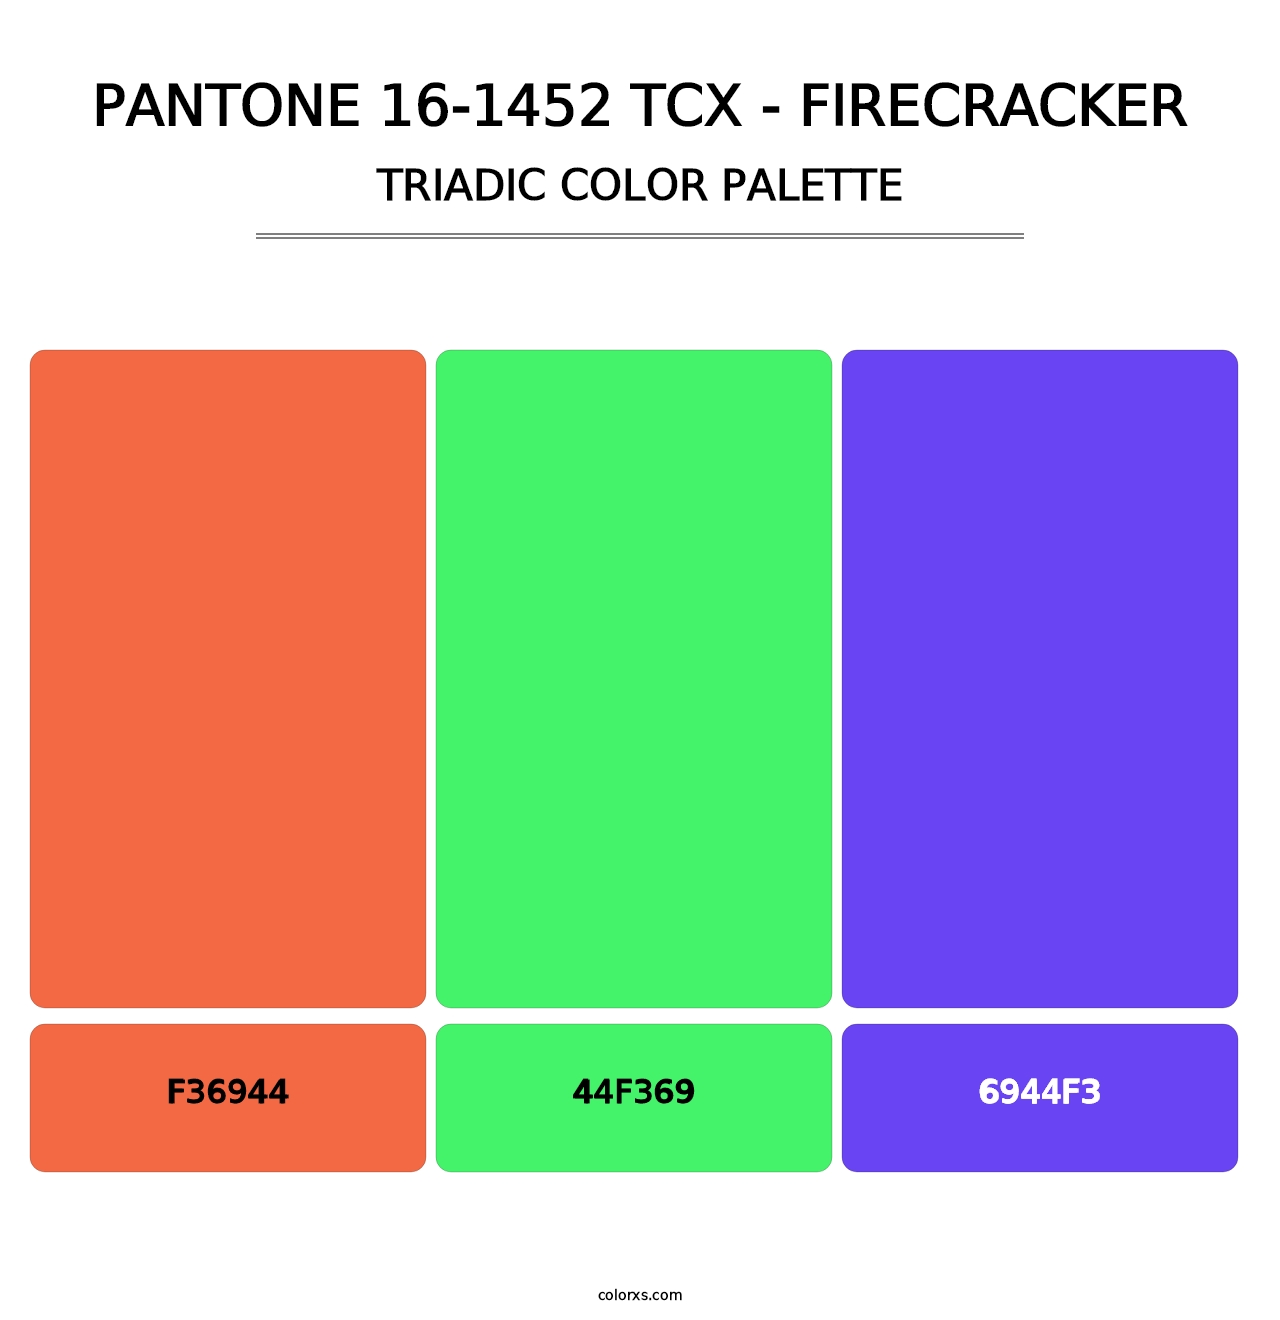 PANTONE 16-1452 TCX - Firecracker - Triadic Color Palette